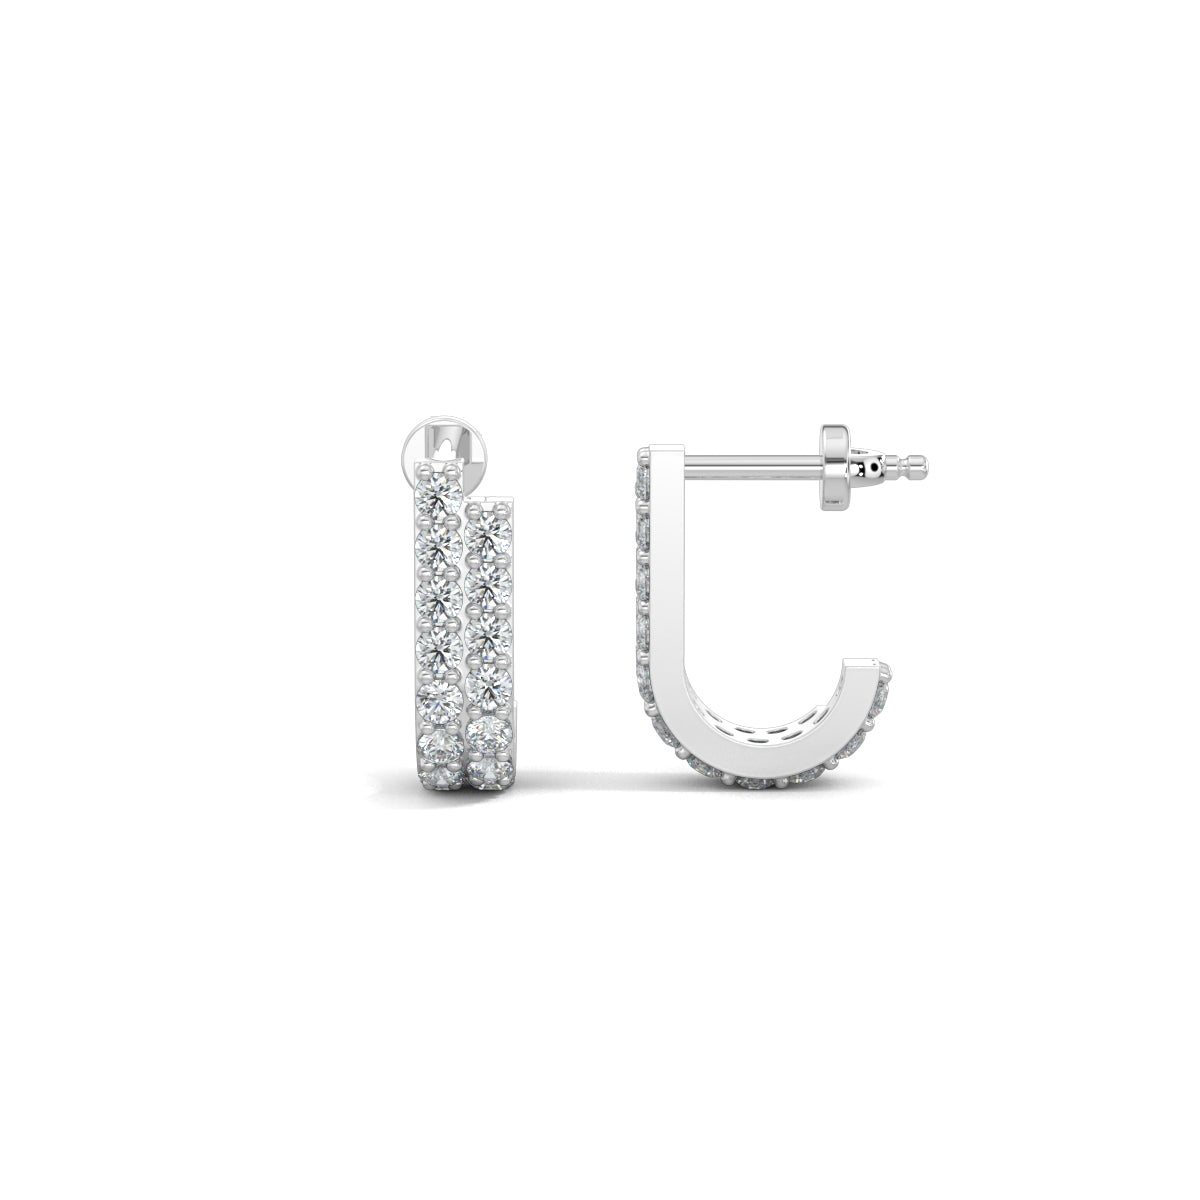 White Gold, Diamond Earrings, LunaDazzle Earrings, Half-bali diamond earrings, Natural Diamonds, Lab-grown diamonds, Pave diamond earrings, Luxury diamond jewelry, Contemporary diamond earrings